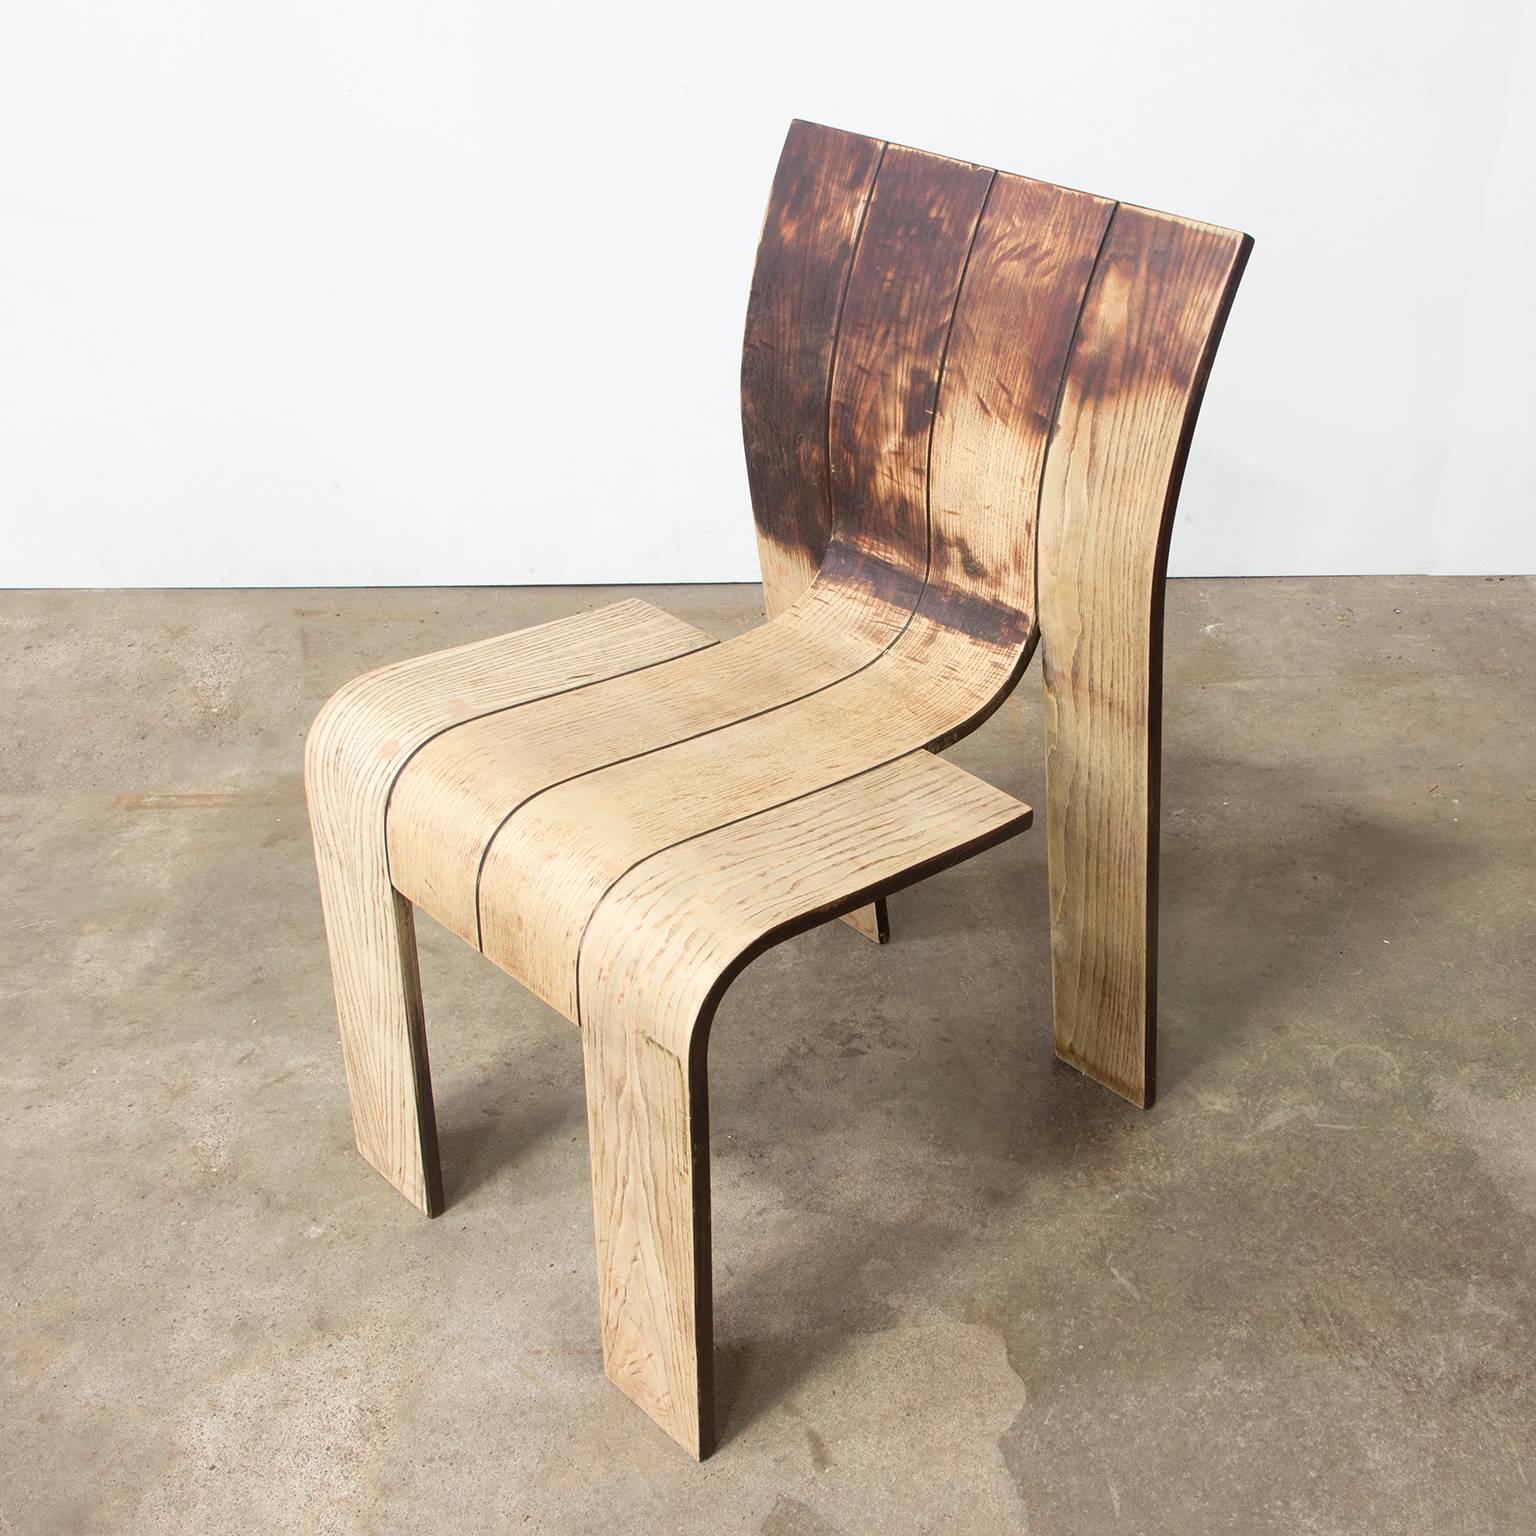 1974, Gijs Bakker, Castelijn, teilweise lackierter stapelbarer Stuhl mit gebogenen Holzstreifen, 1974 1